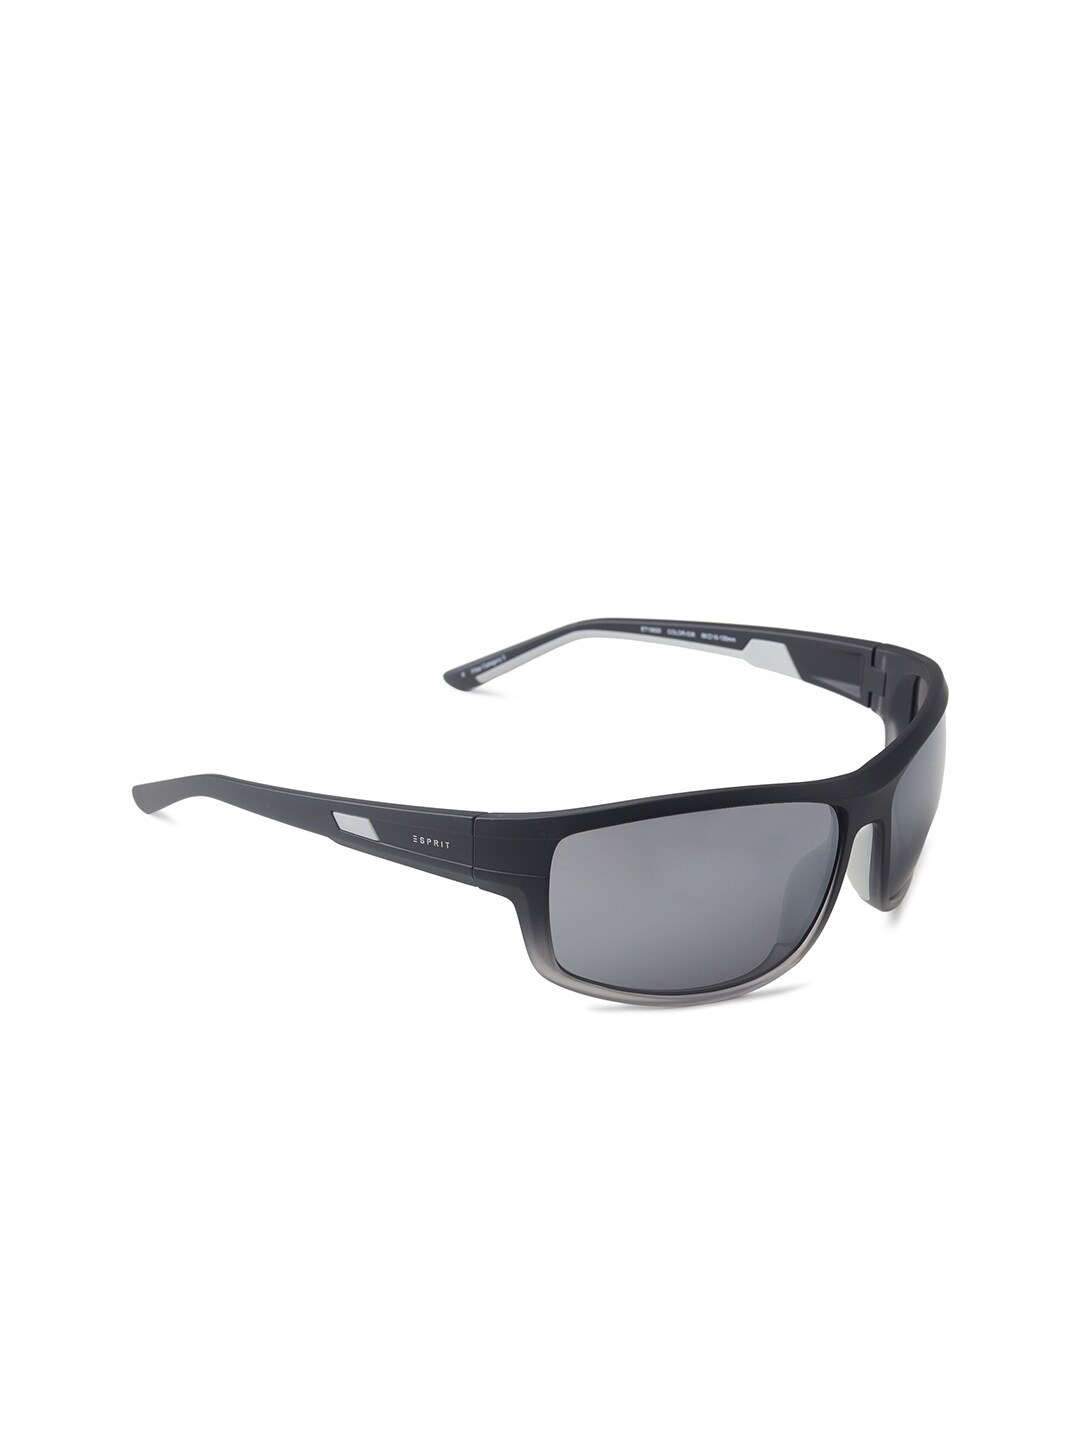 ESPRIT Unisex Grey Lens & Black Rectangle Sunglasses with UV Protected Lens ET19655-66-538 Price in India